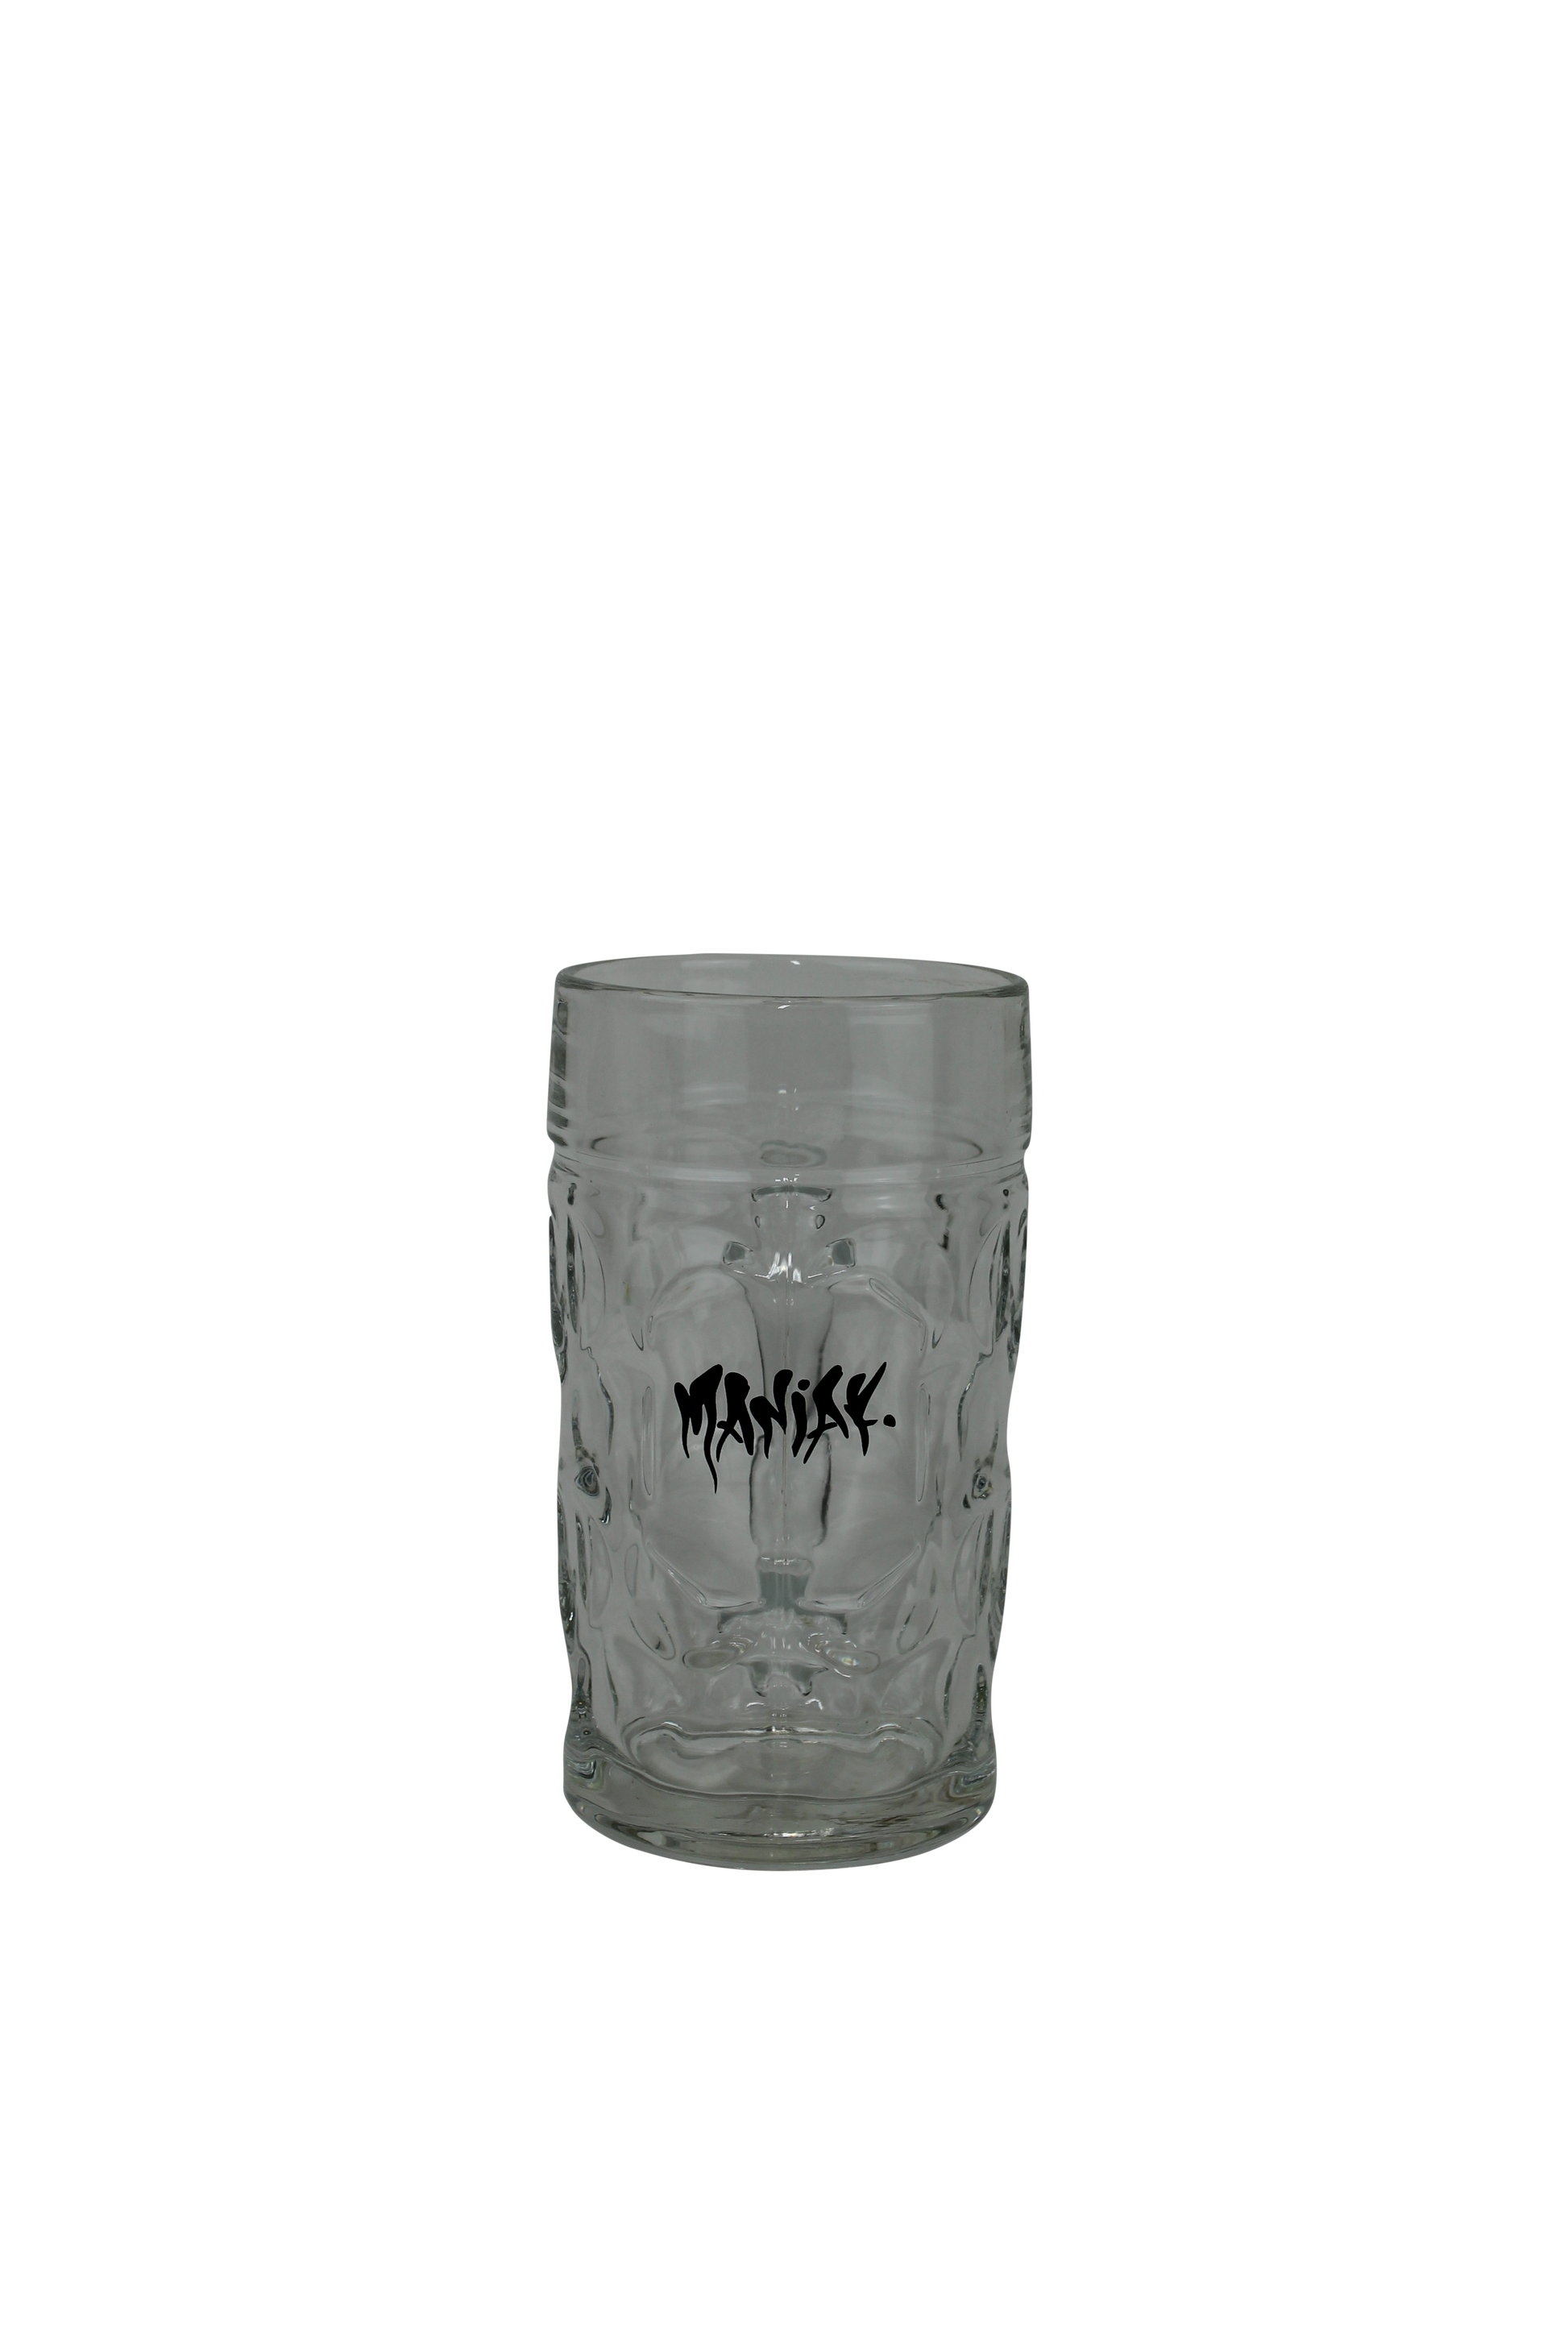 Maniak Glass Beer Mug